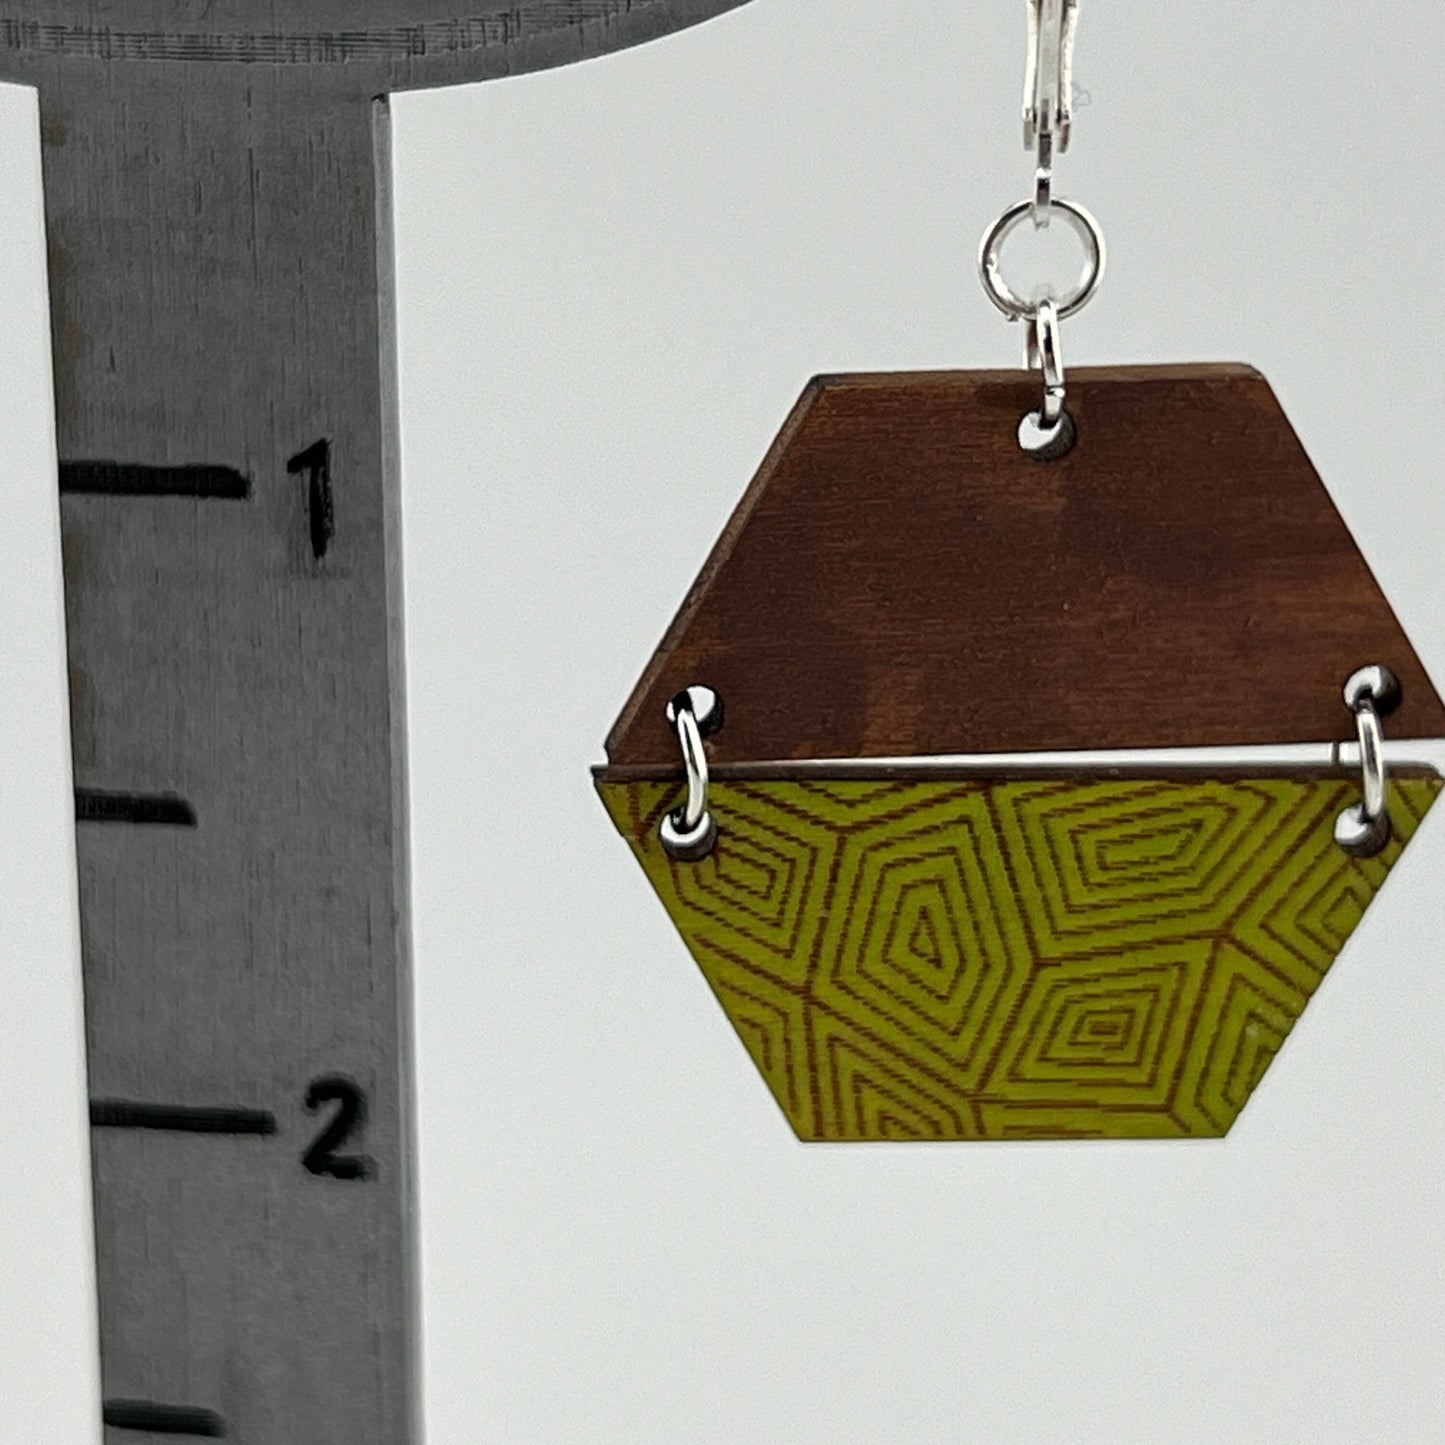 Geometric bohemian wood engraved hexagon handmade earrings